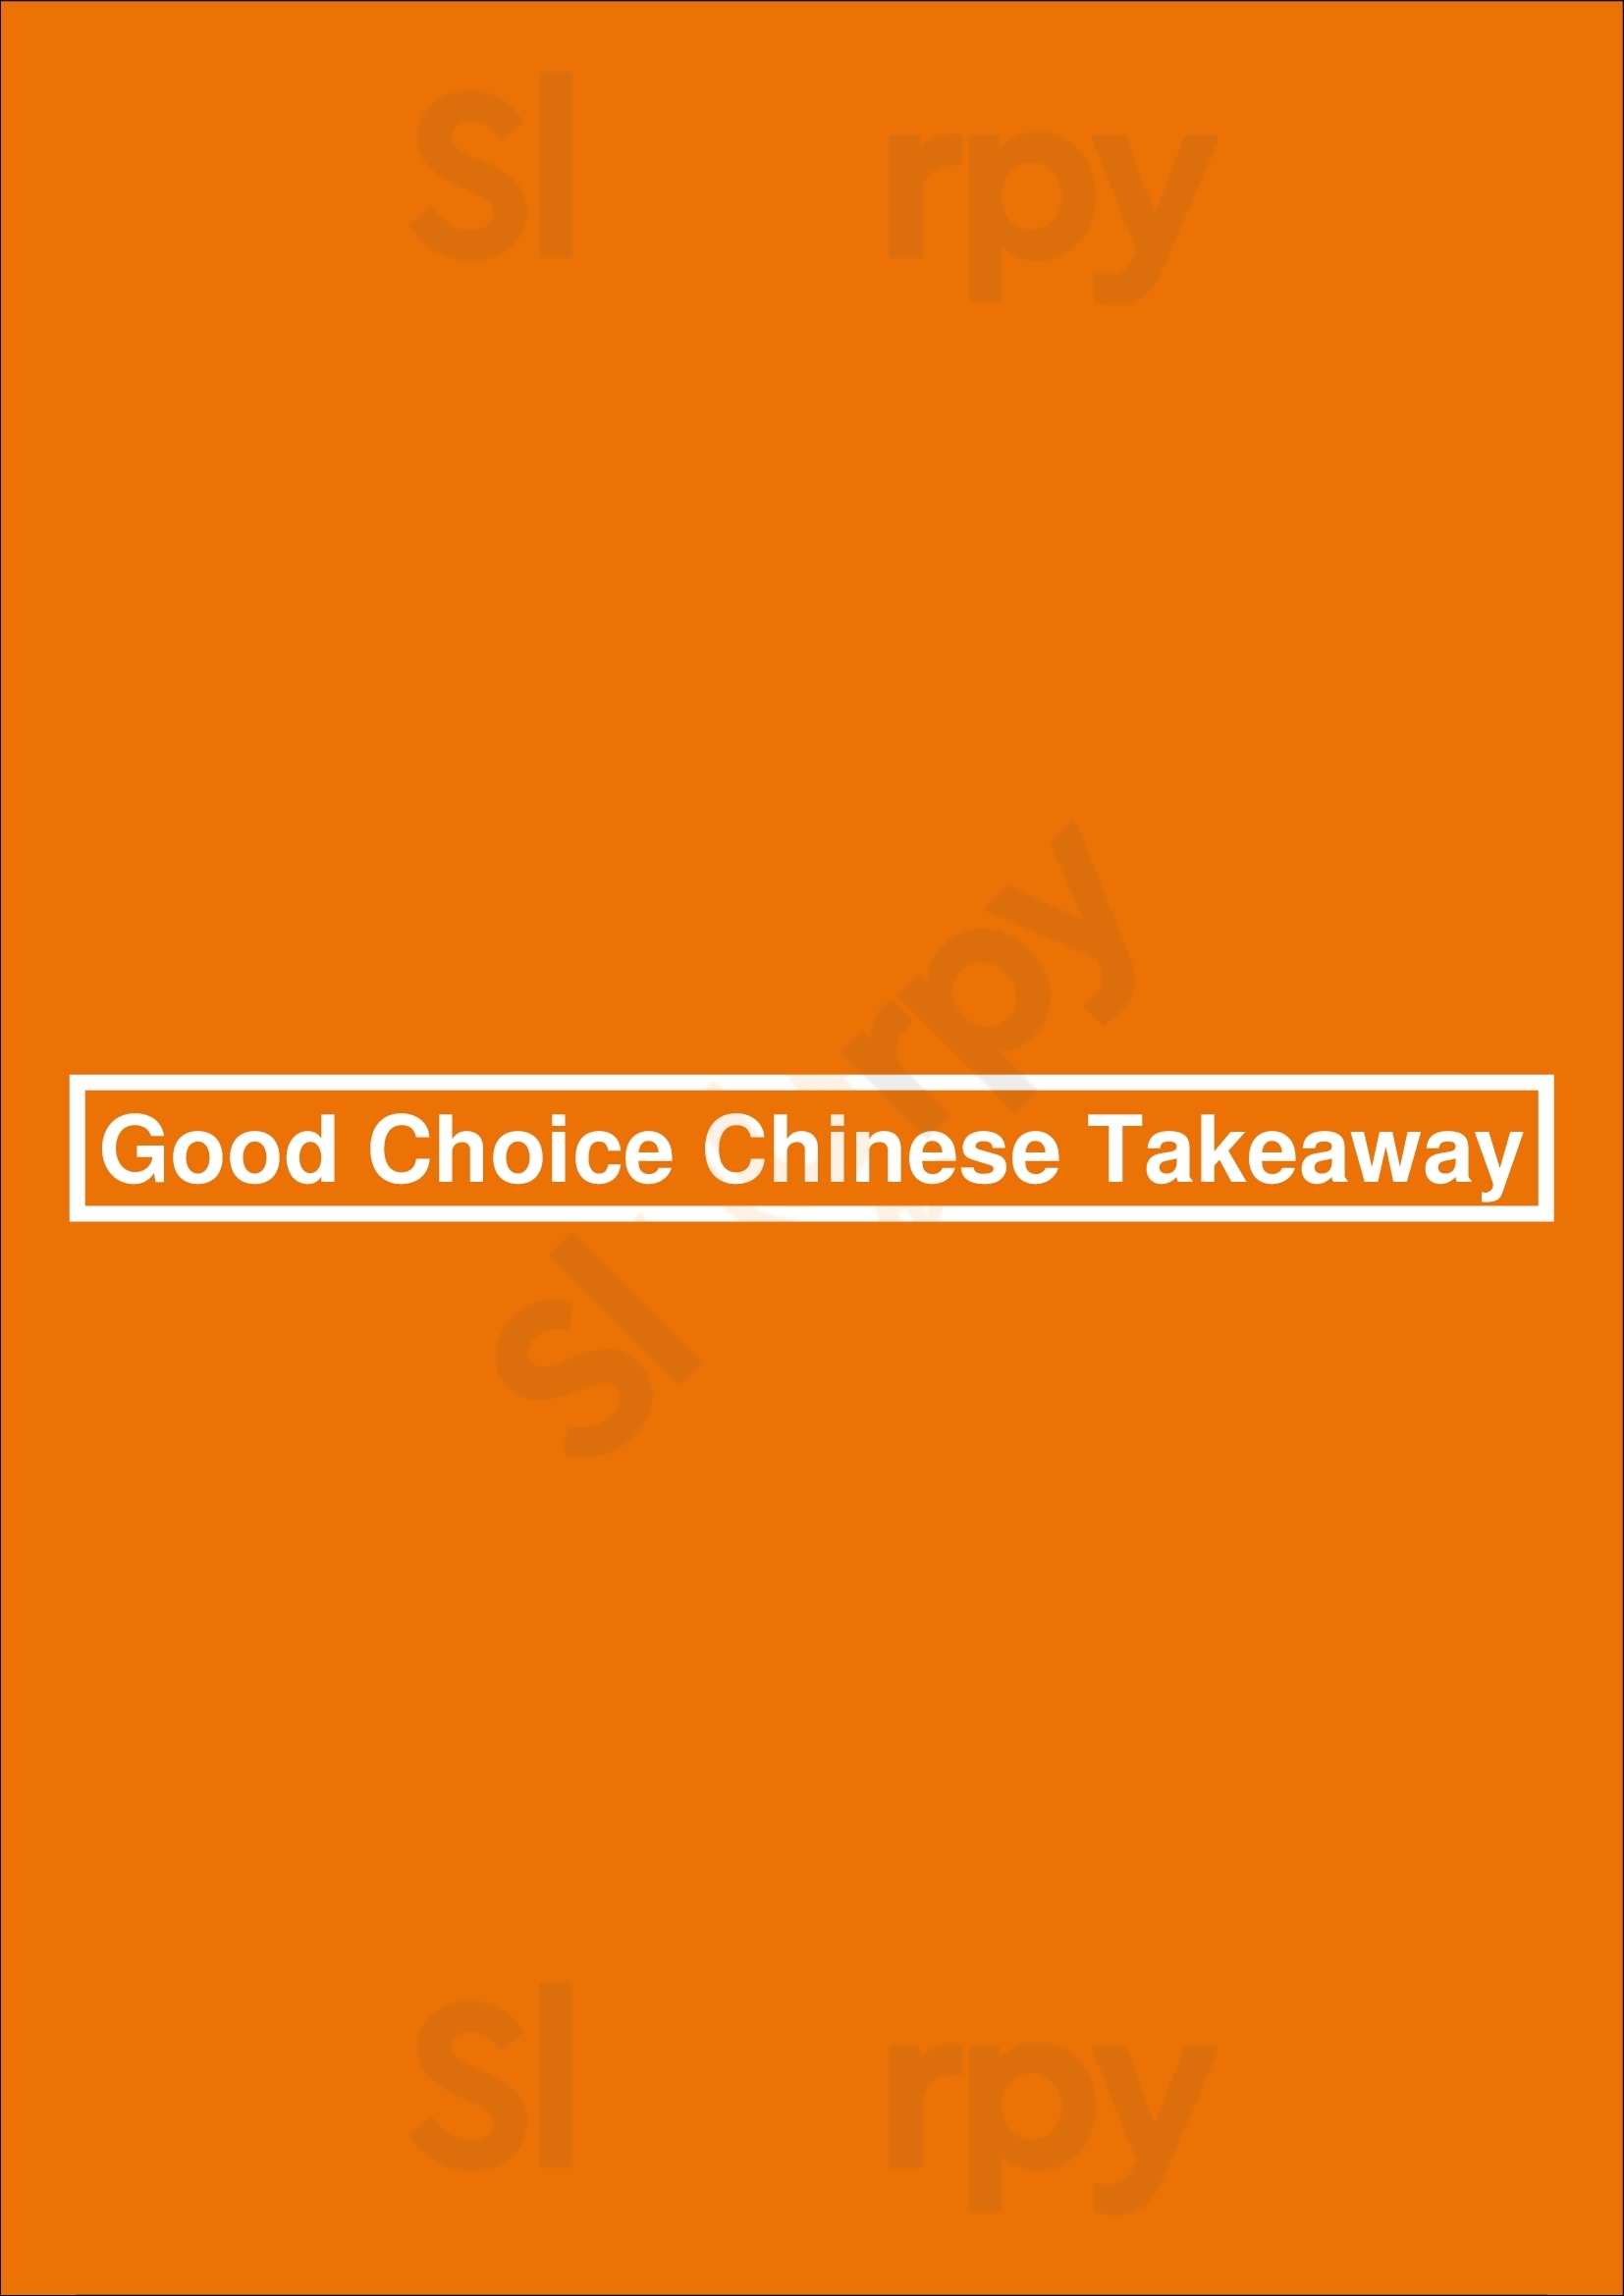 Good Choice Chinese Takeaway Edinburgh Menu - 1